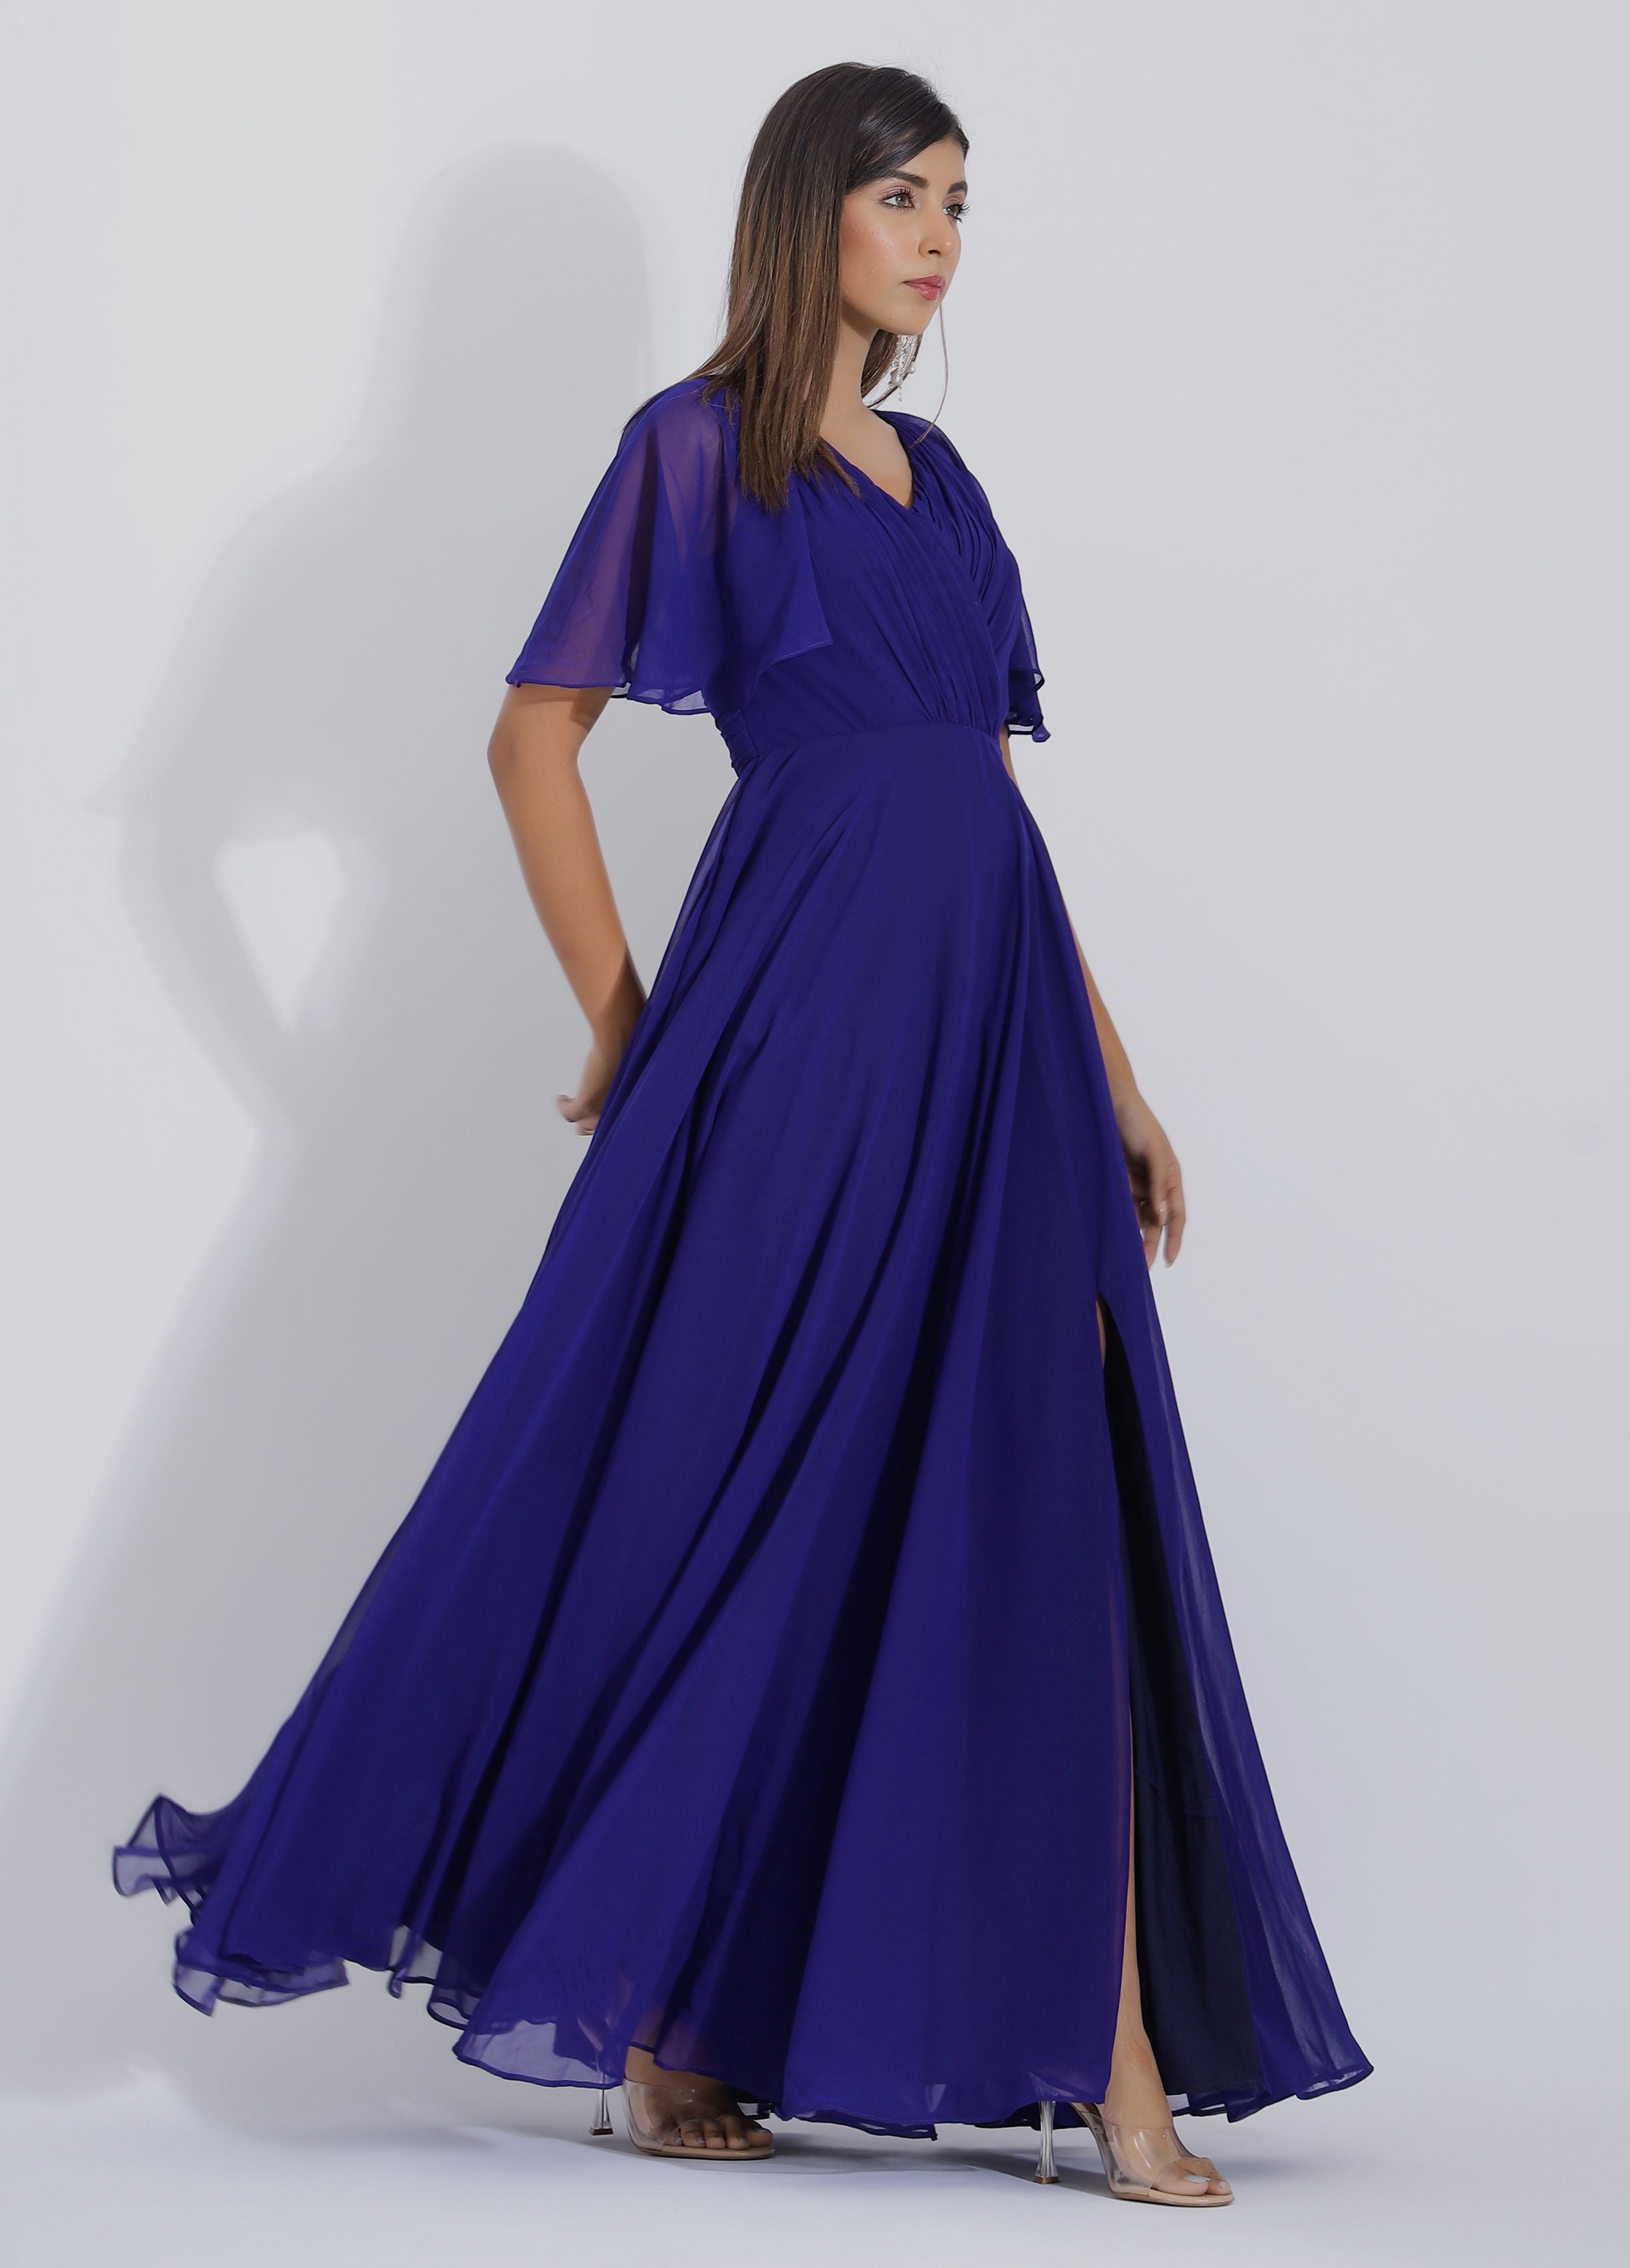 Blue Evening Gown 2